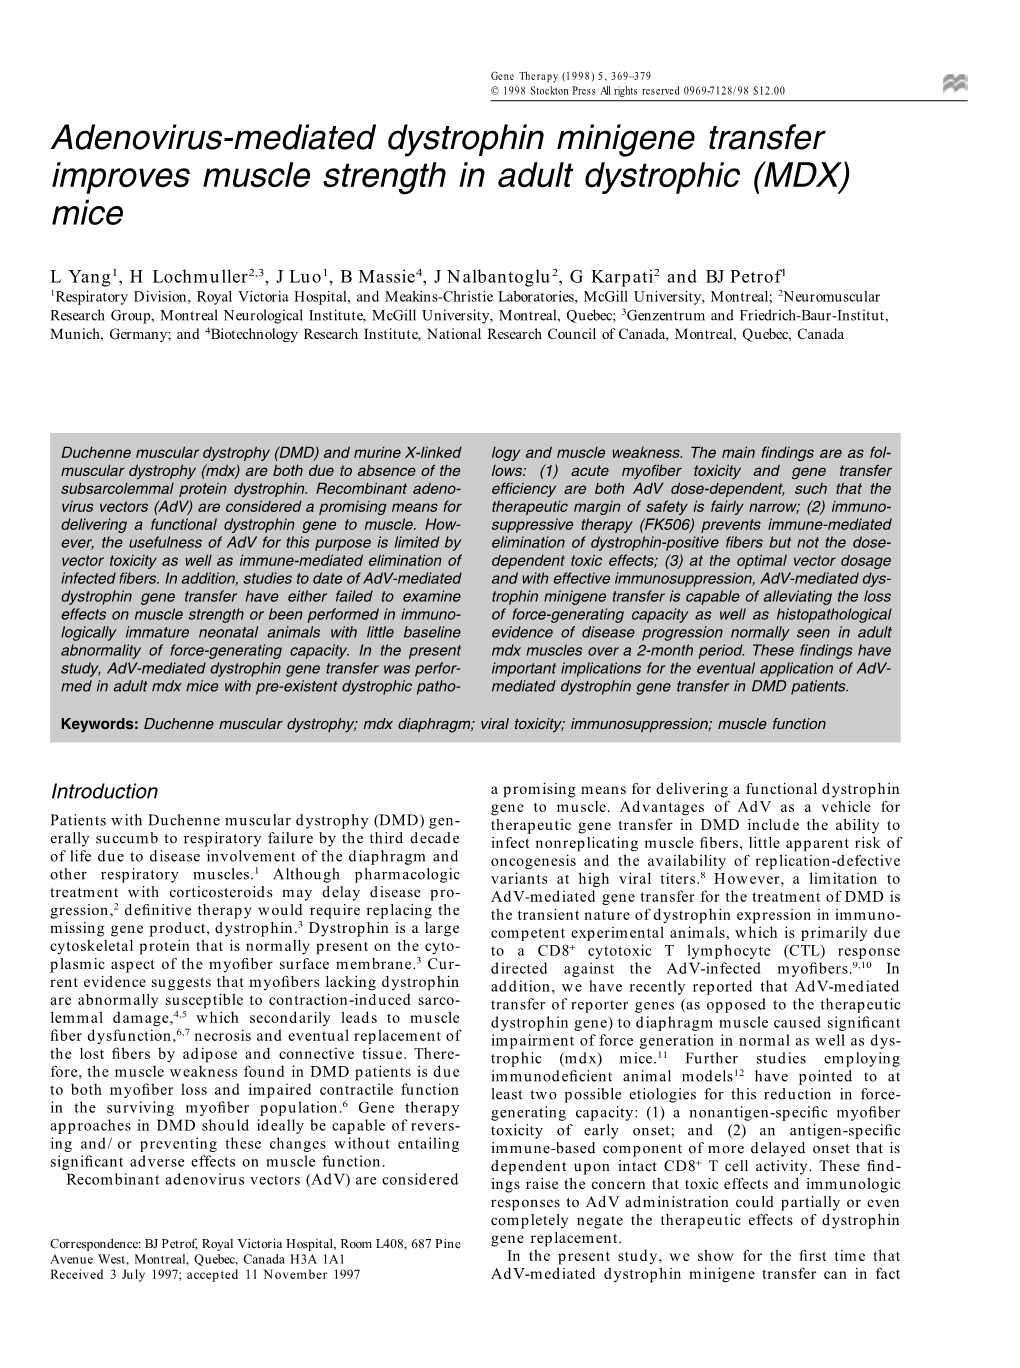 Adenovirus-Mediated Dystrophin Minigene Transfer Improves Muscle Strength in Adult Dystrophic (MDX) Mice